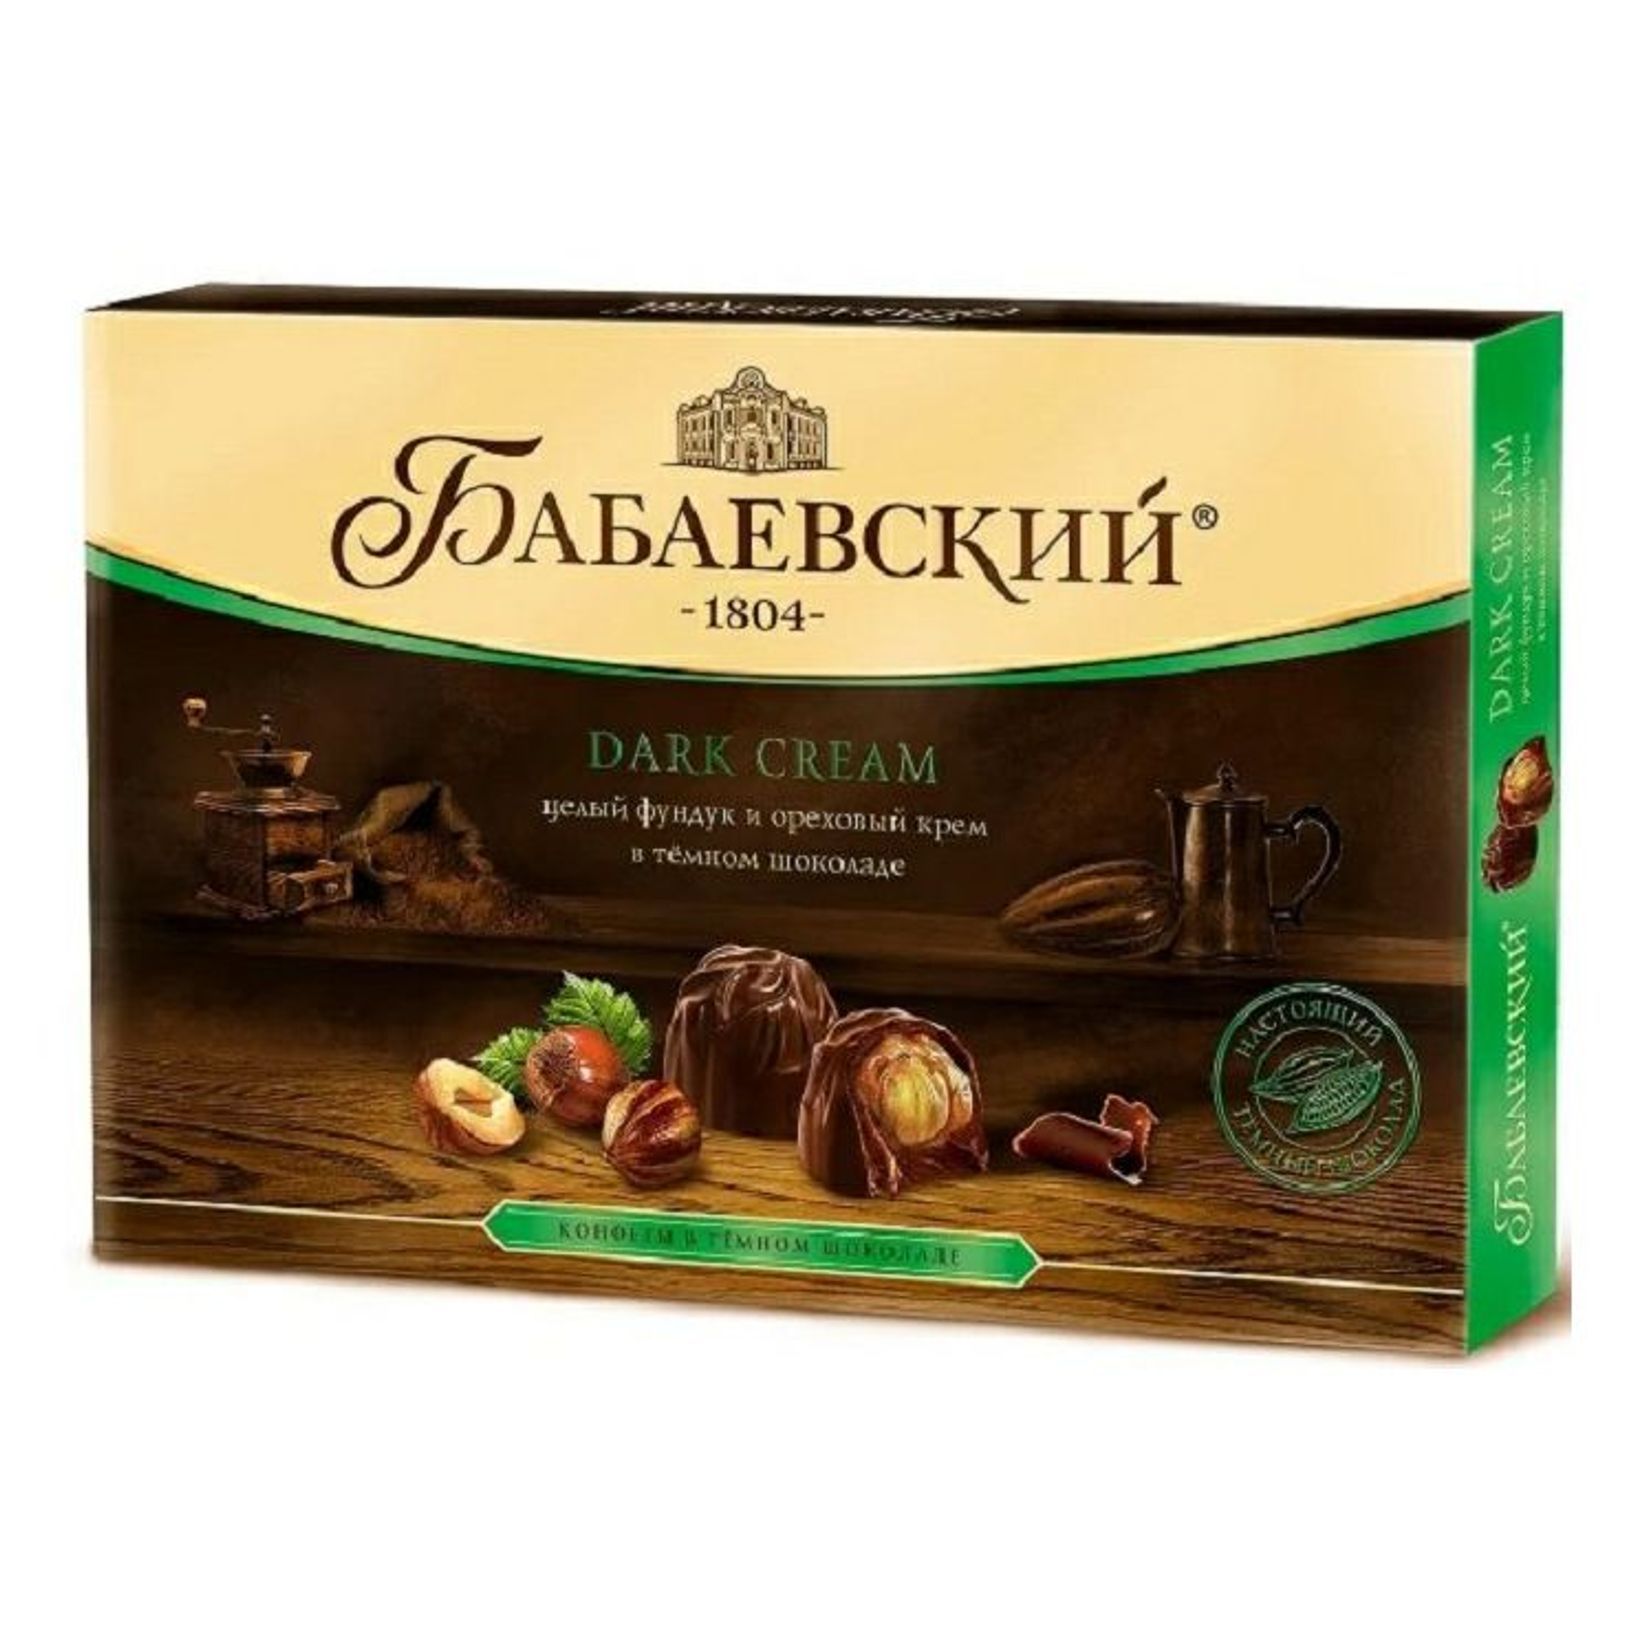 Бабаевский Dark Cream collection